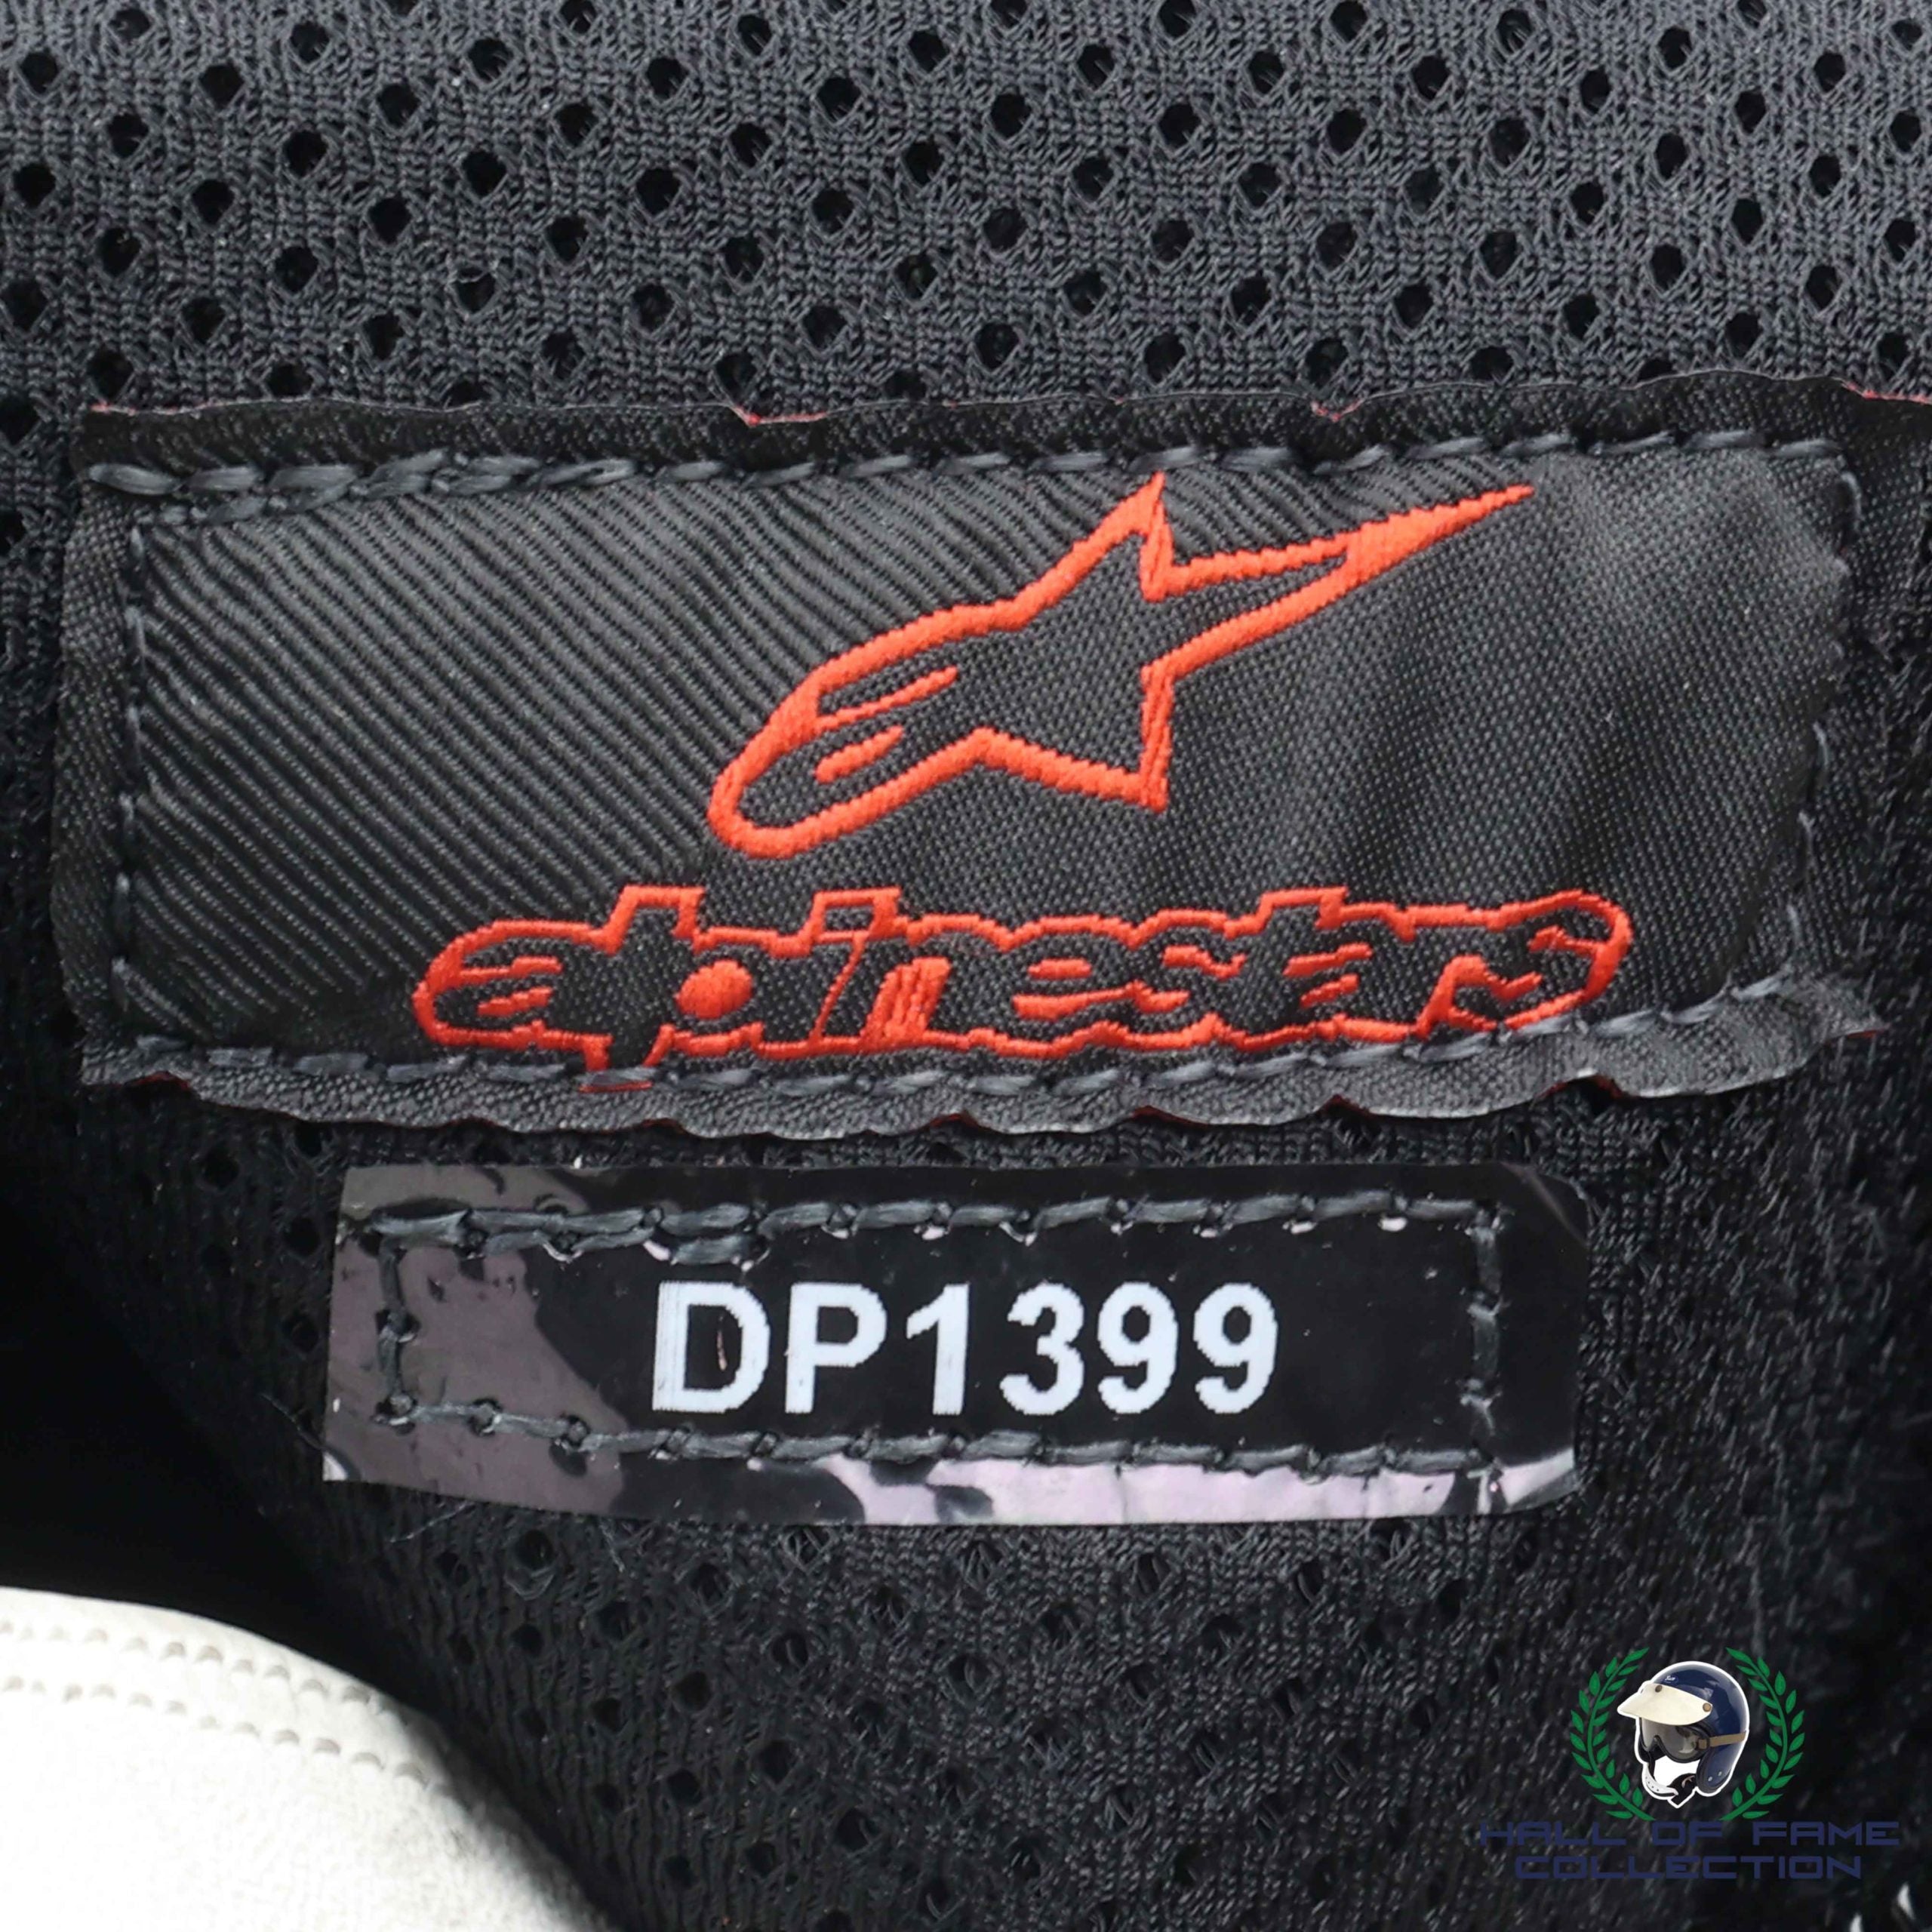 2013 Dani Pedrosa Signed Race Used Repsol Honda Alpinestars MotoGP Boots